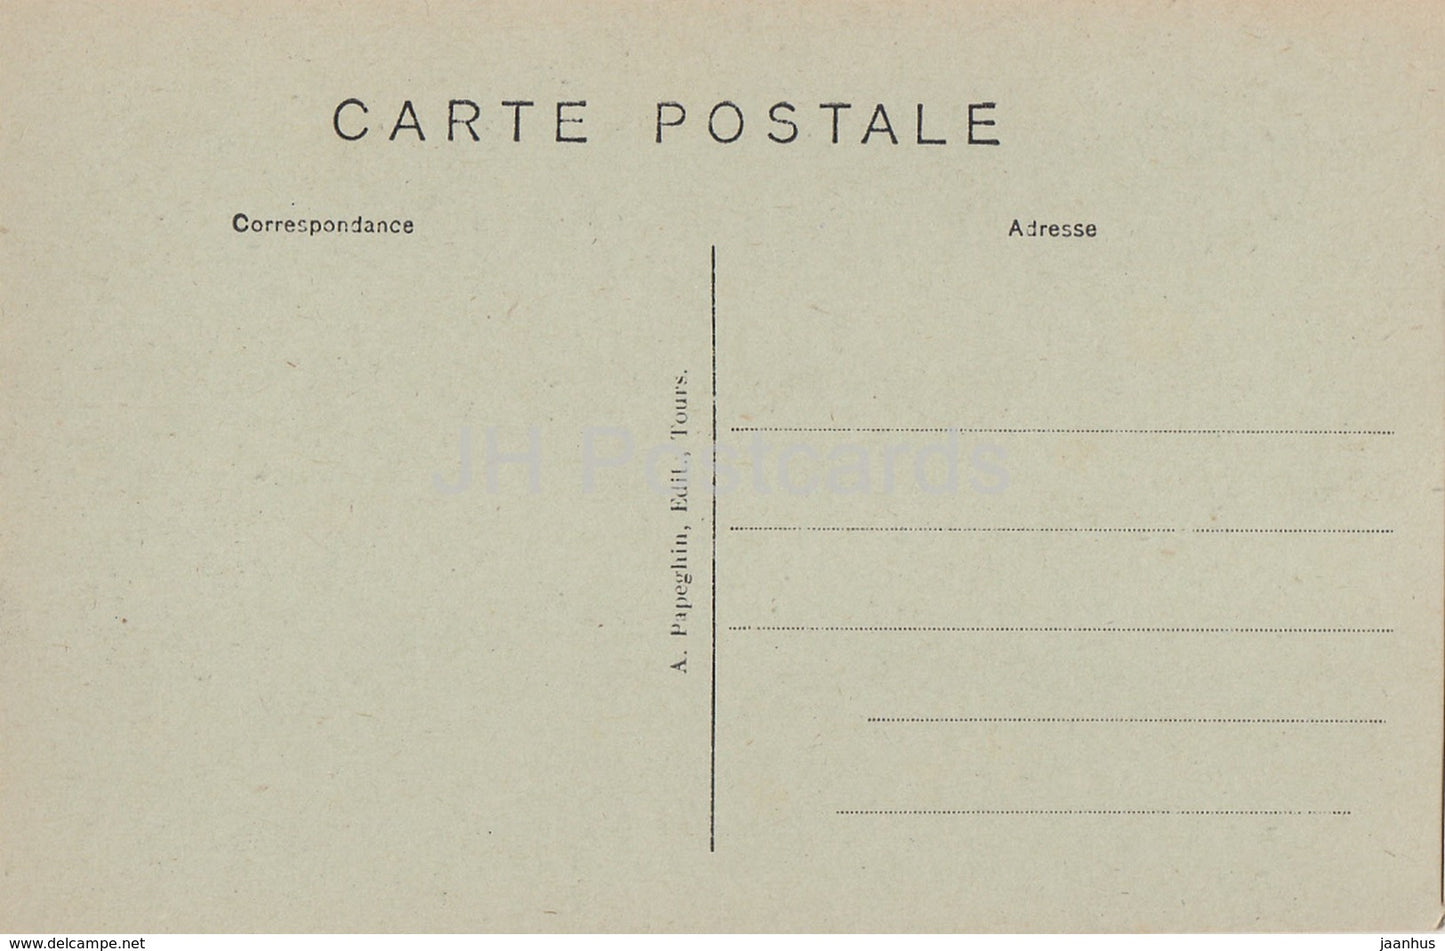 Loches - Le Chateau Royal - Facade Renaissance - castle - 67 - old postcard - France - unused